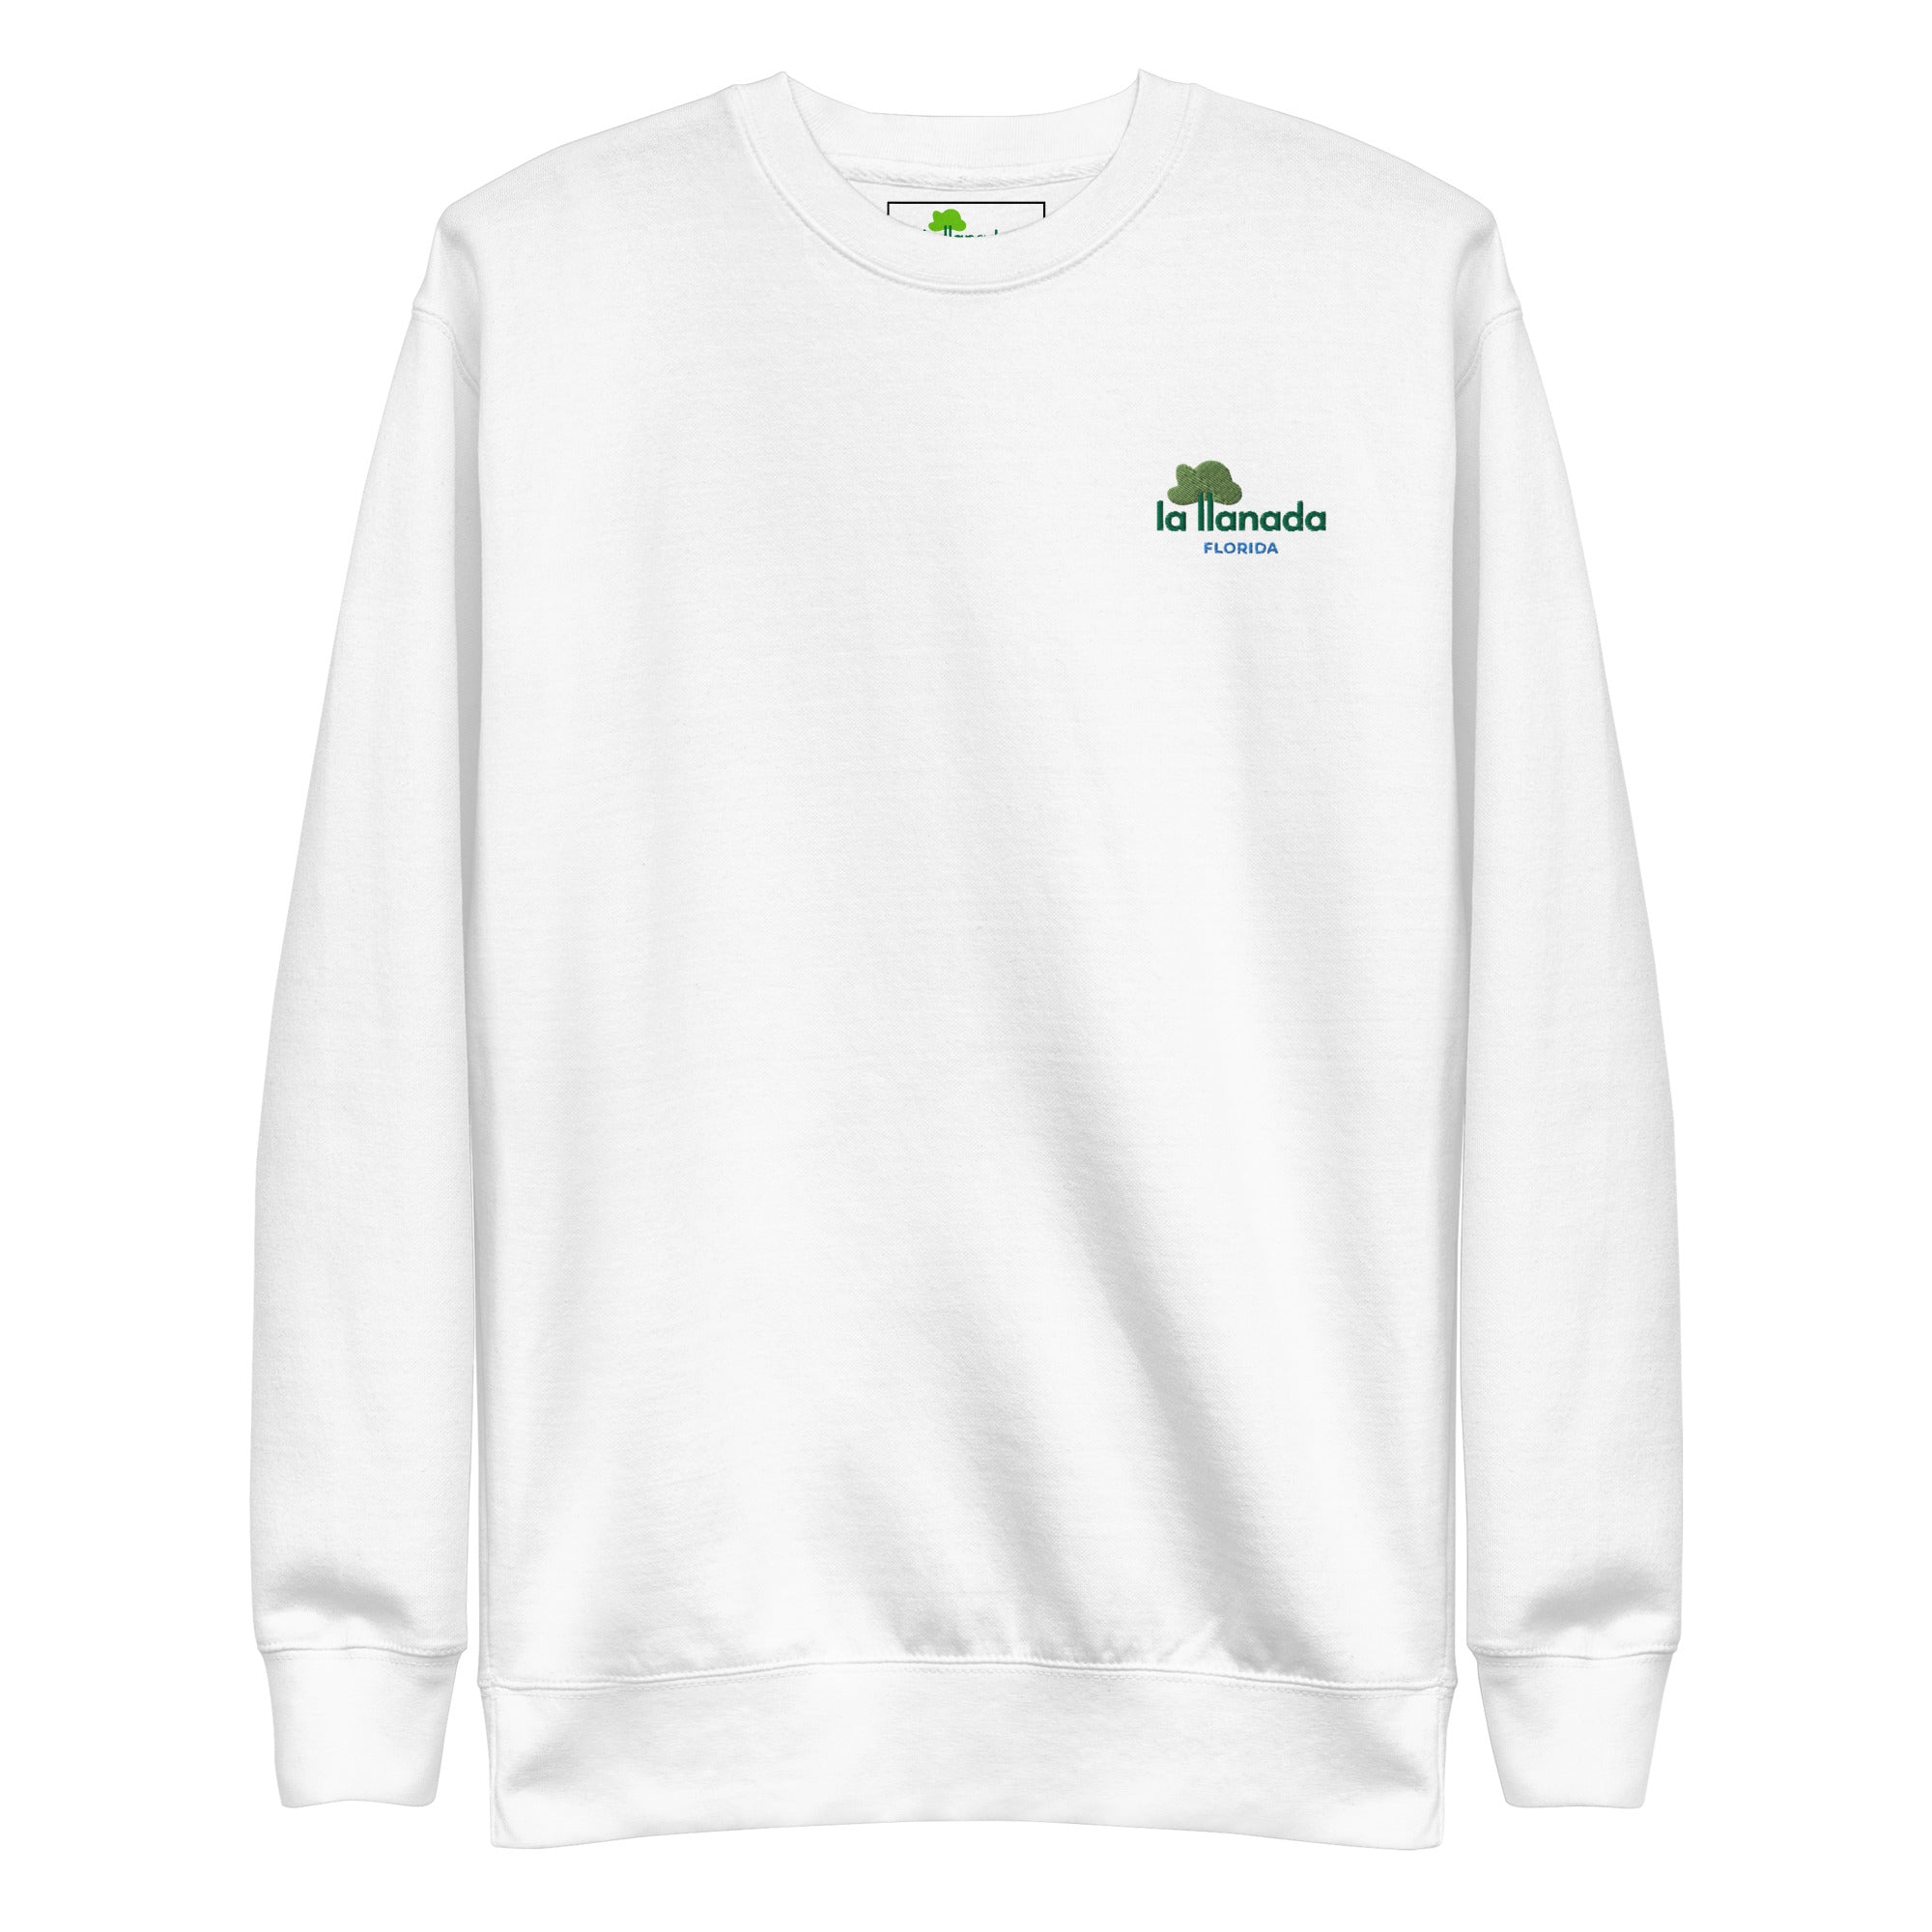 unisex-premium-sweatshirt-white-front-64ca884807310.jpg